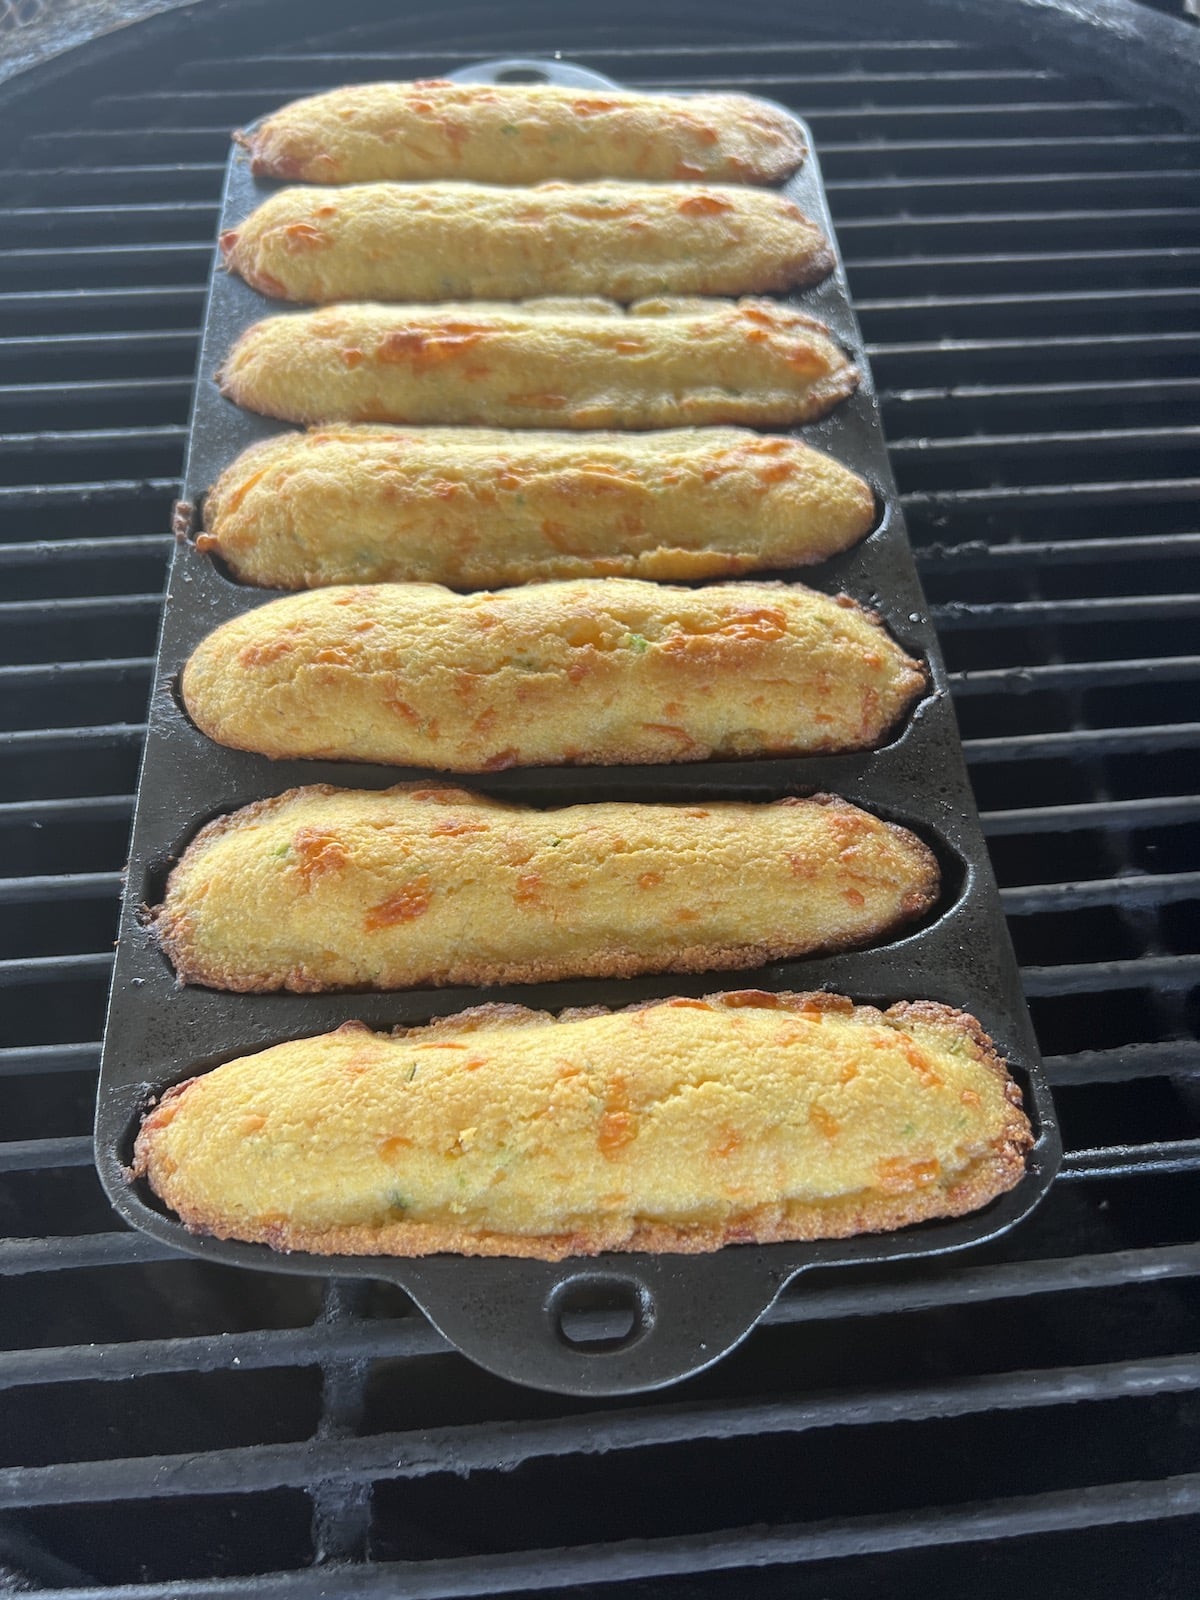 Grilling Cornbread Sticks in a cast iron pan.